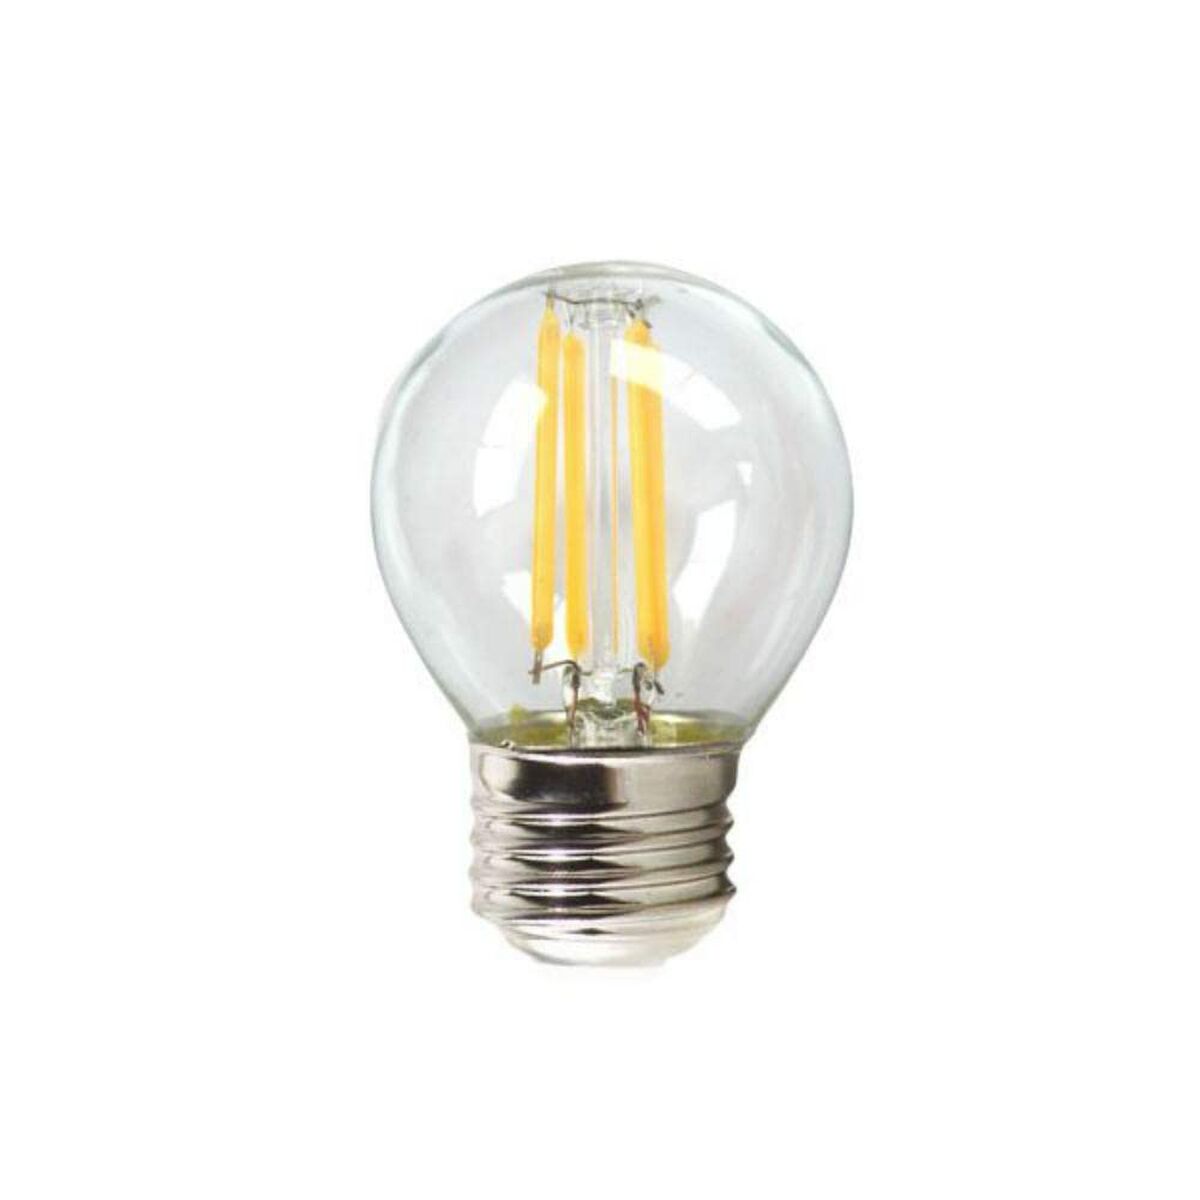 LED lamp Silver Electronics 961327